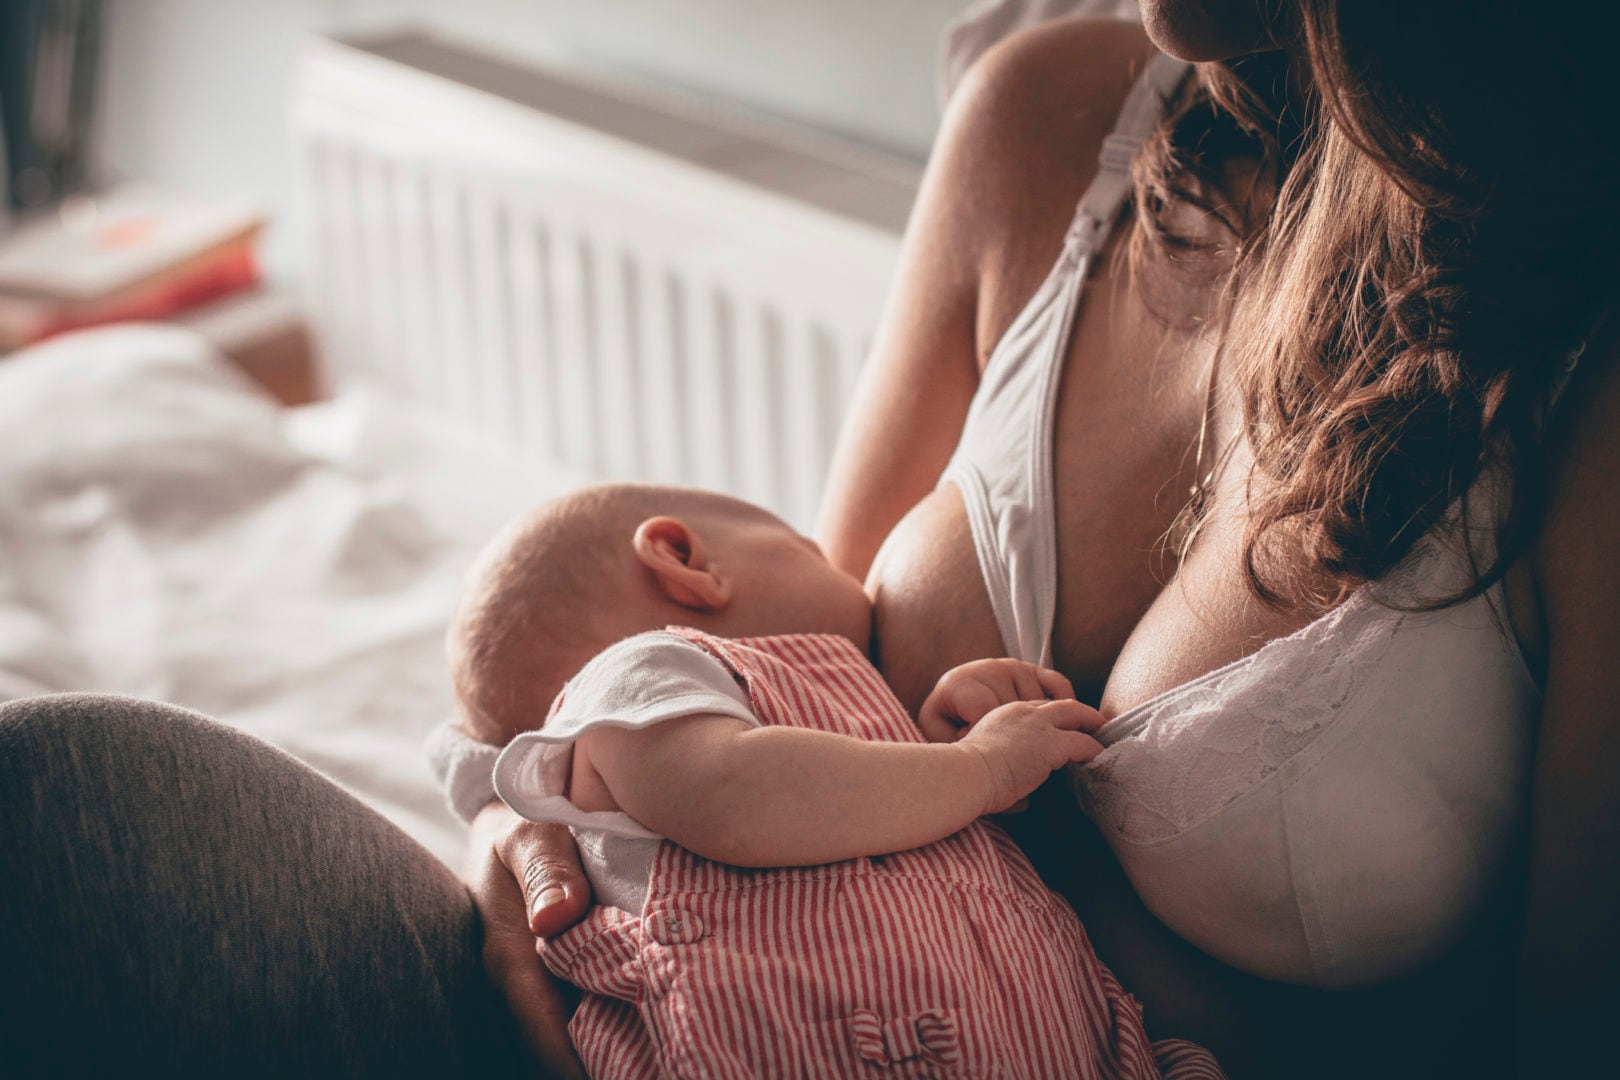 Nursing bra's to support breastfeeding and postpartum moms